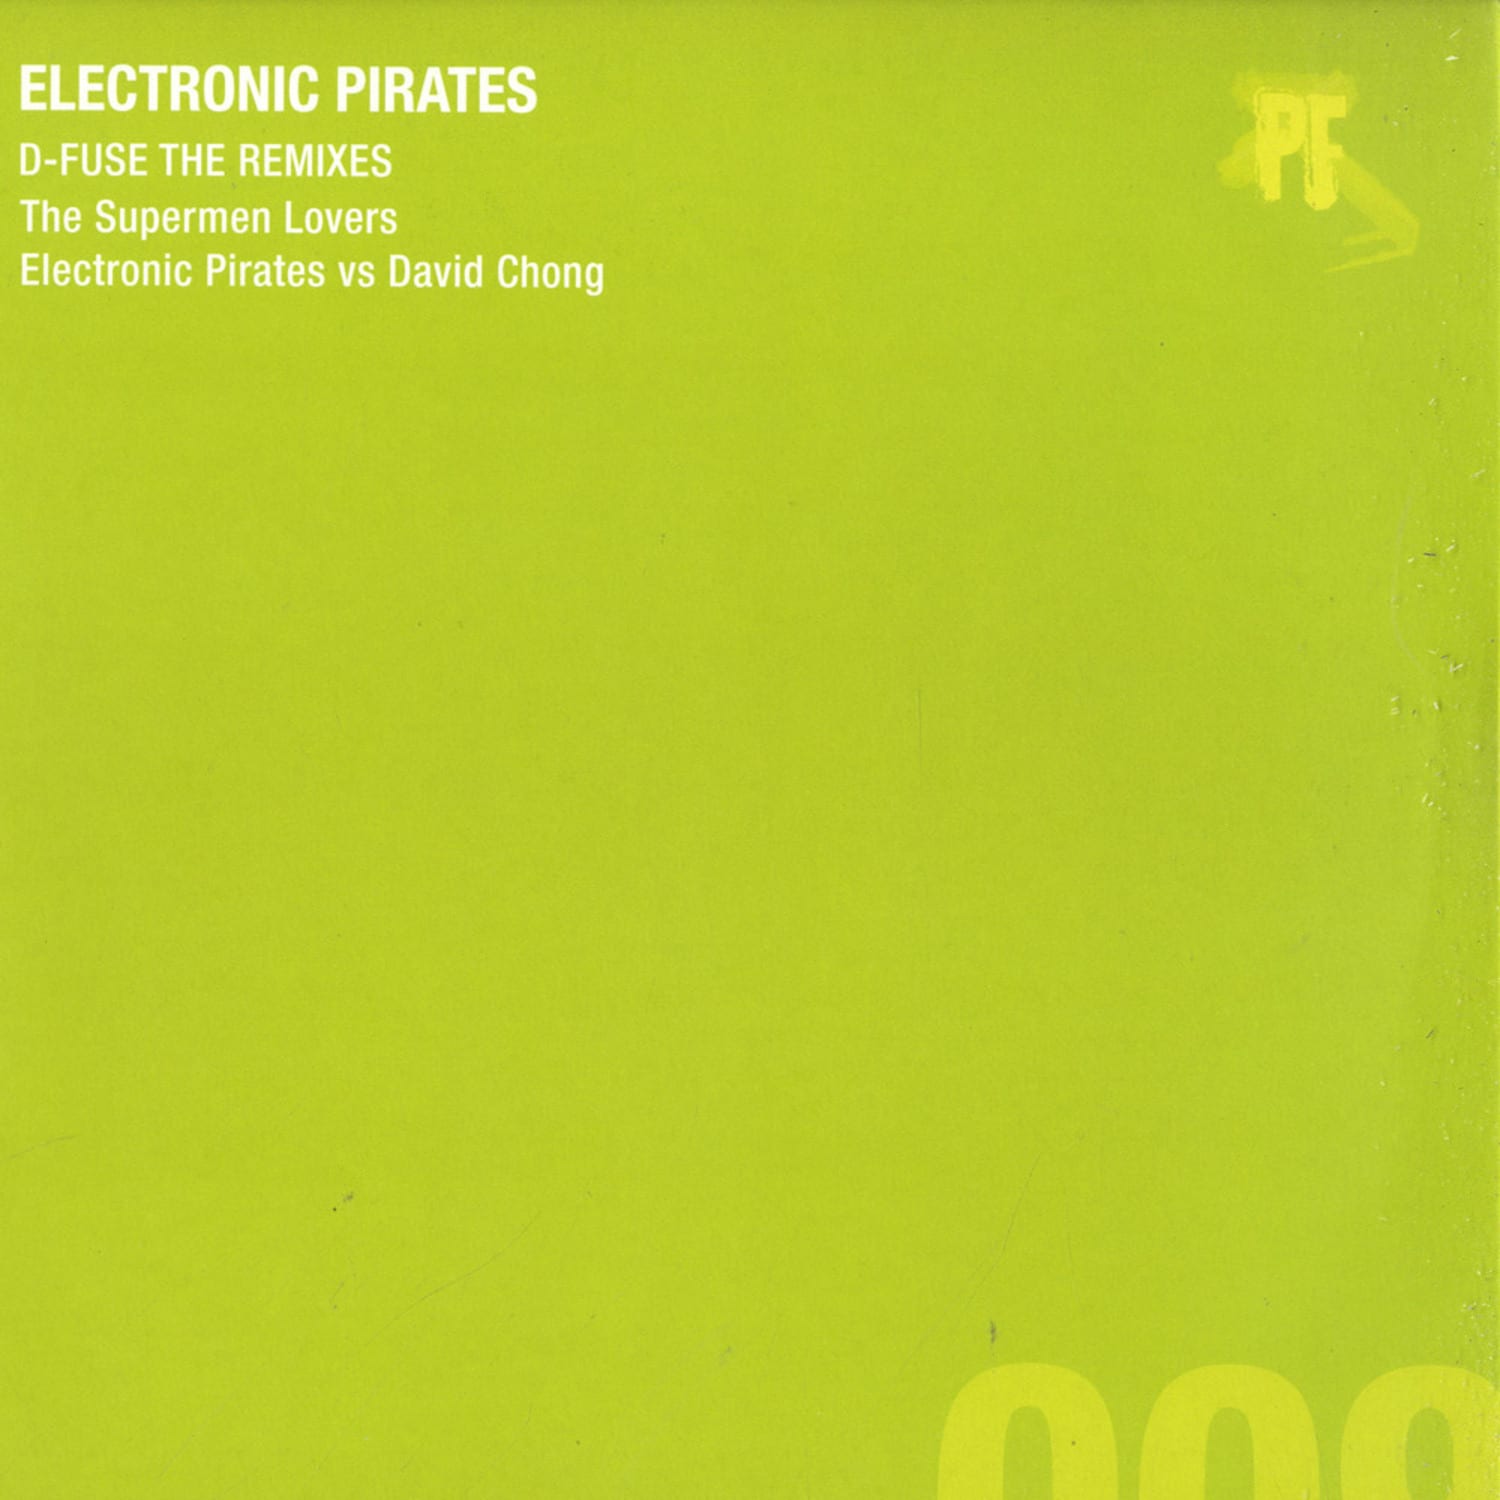 Electronic Pirates vs. David Chong - D-FUSE 